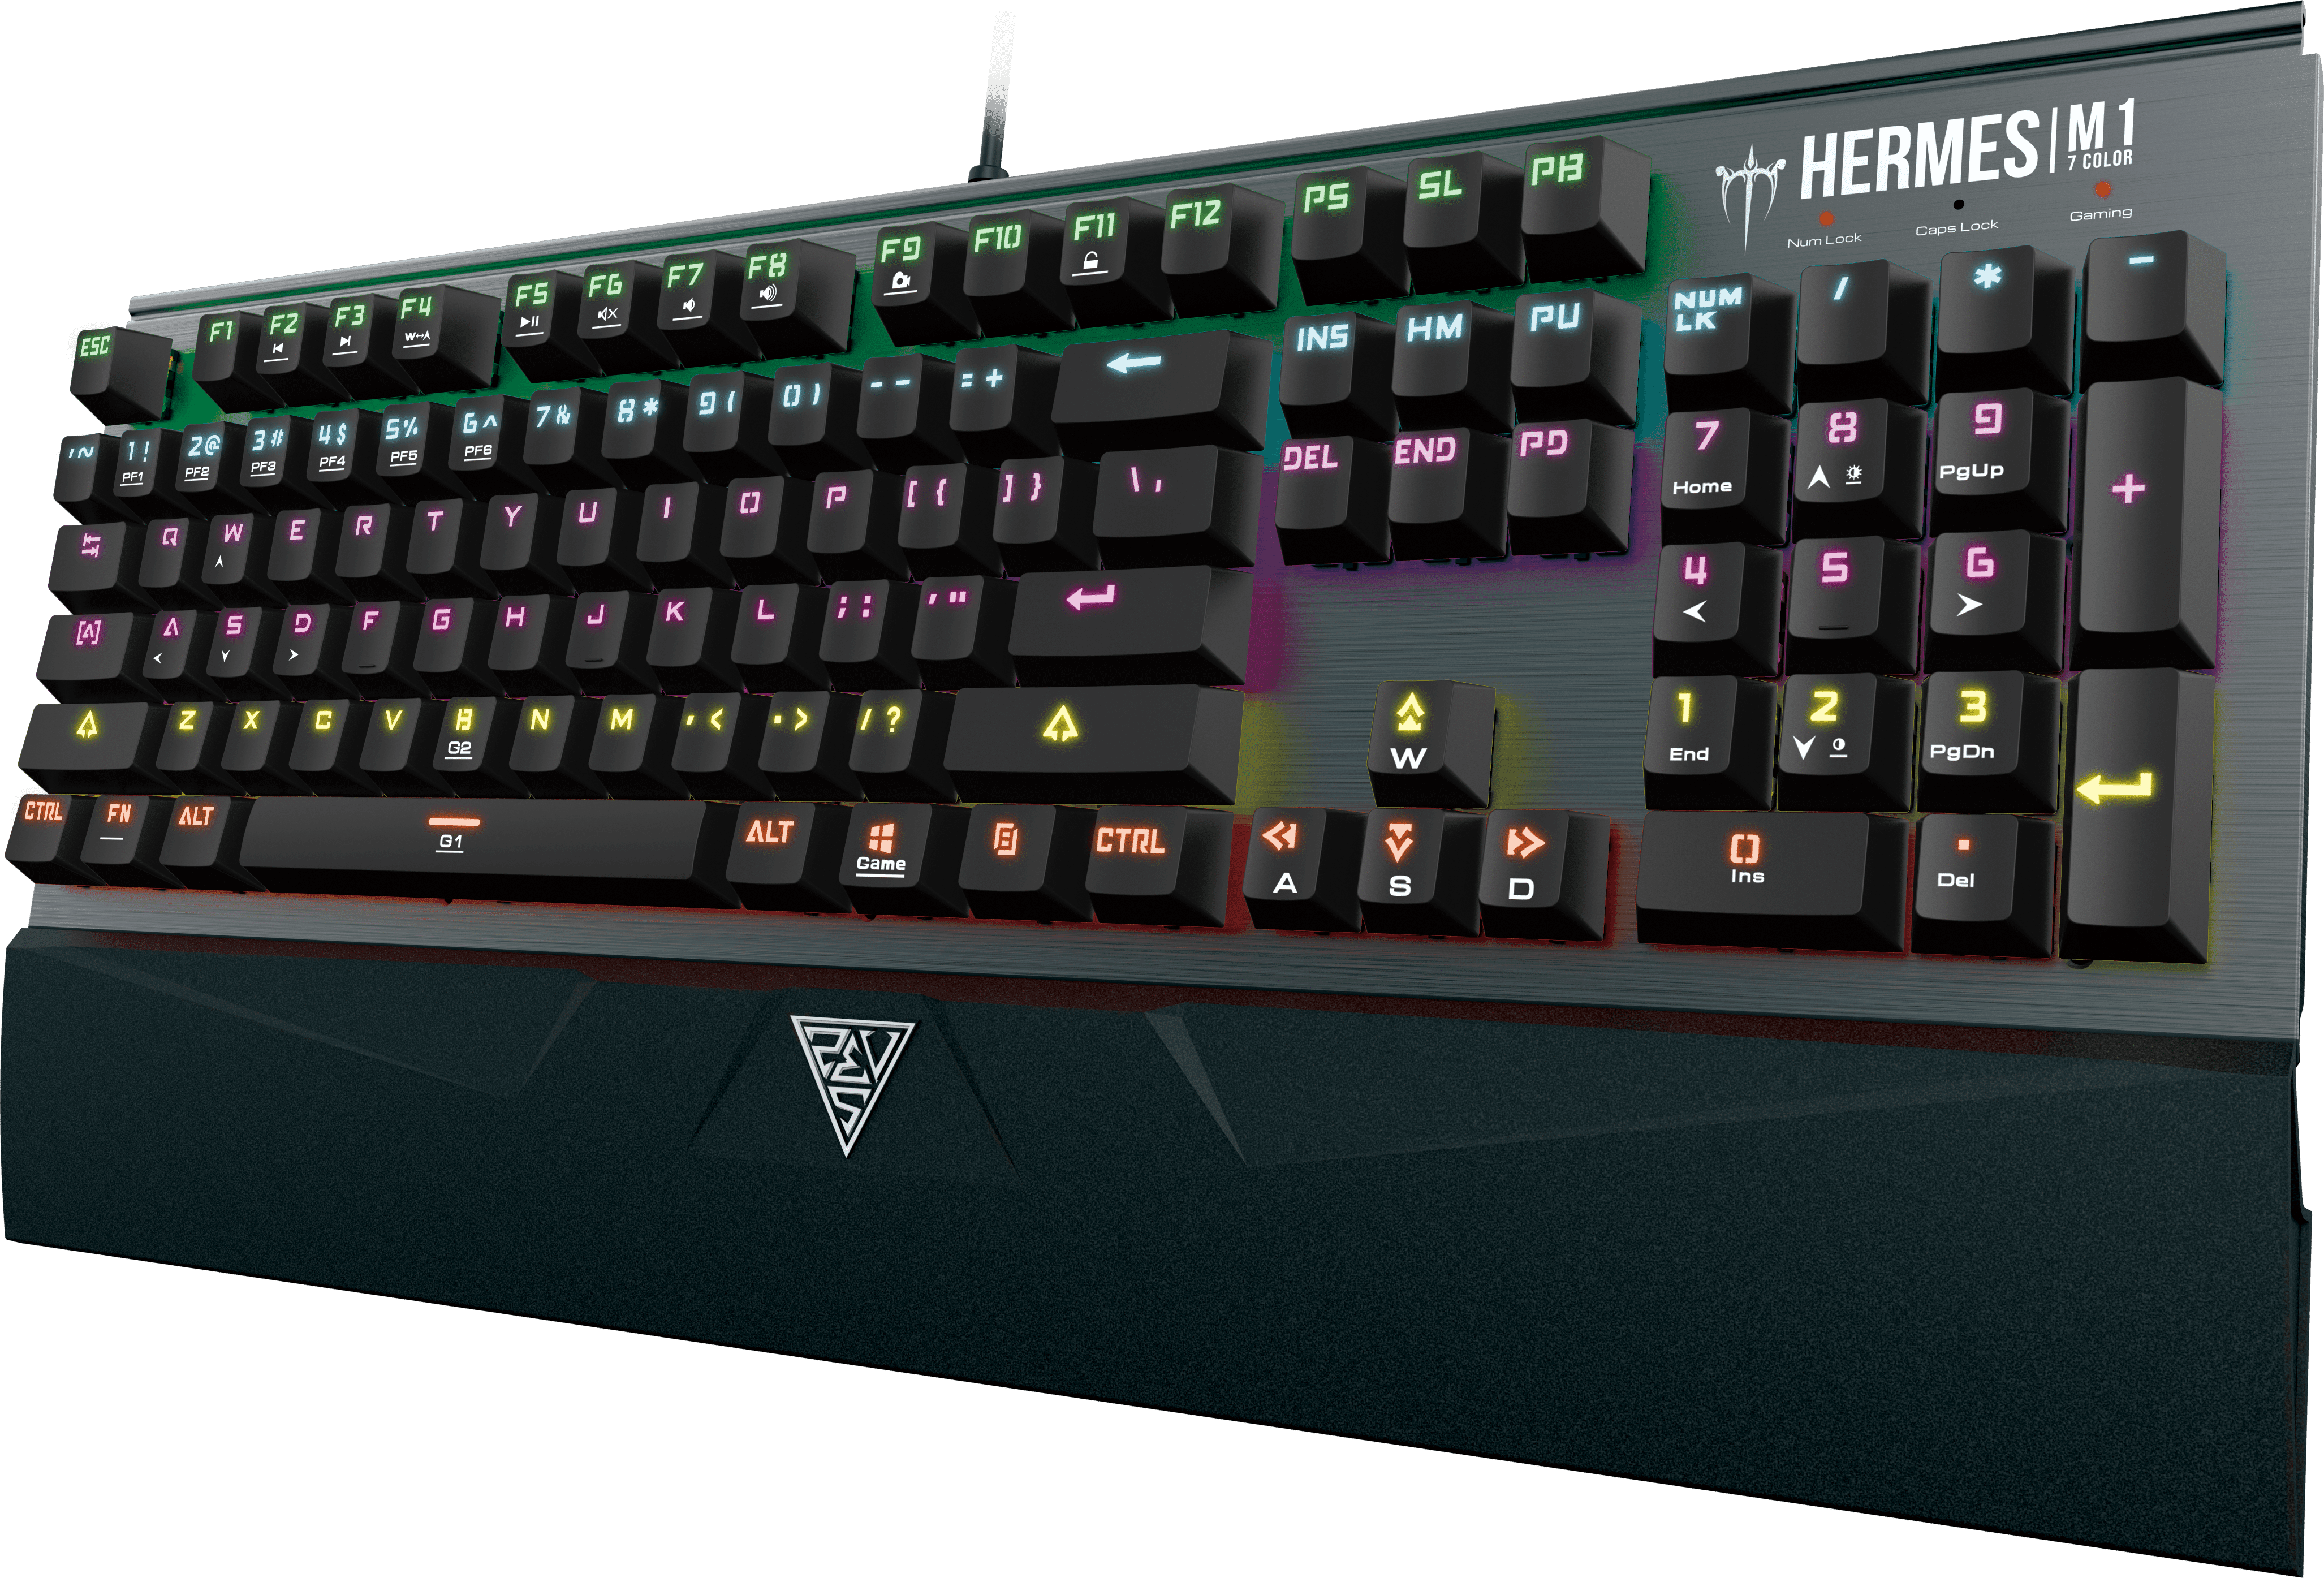 HEREMES M1 7 COLOR Gaming Keyboard  Walmart com Walmart com